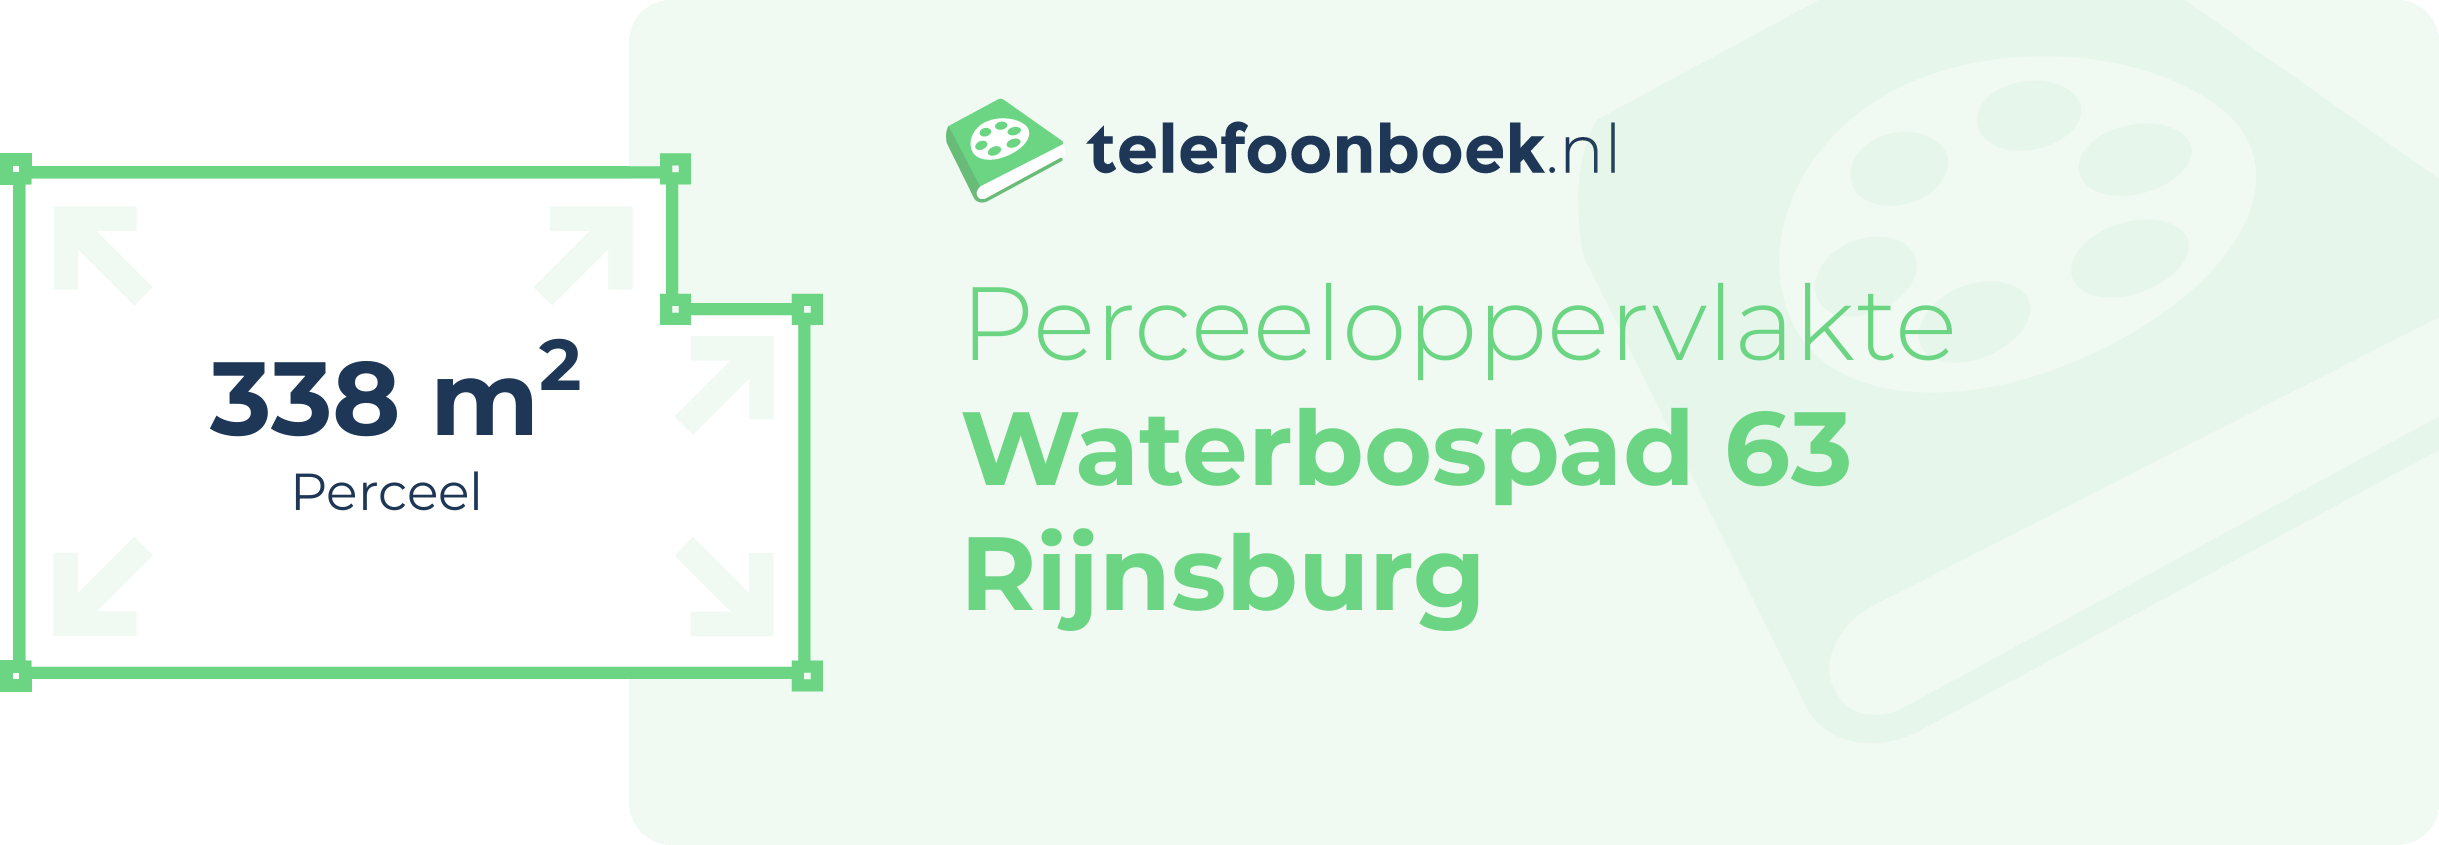 Perceeloppervlakte Waterbospad 63 Rijnsburg